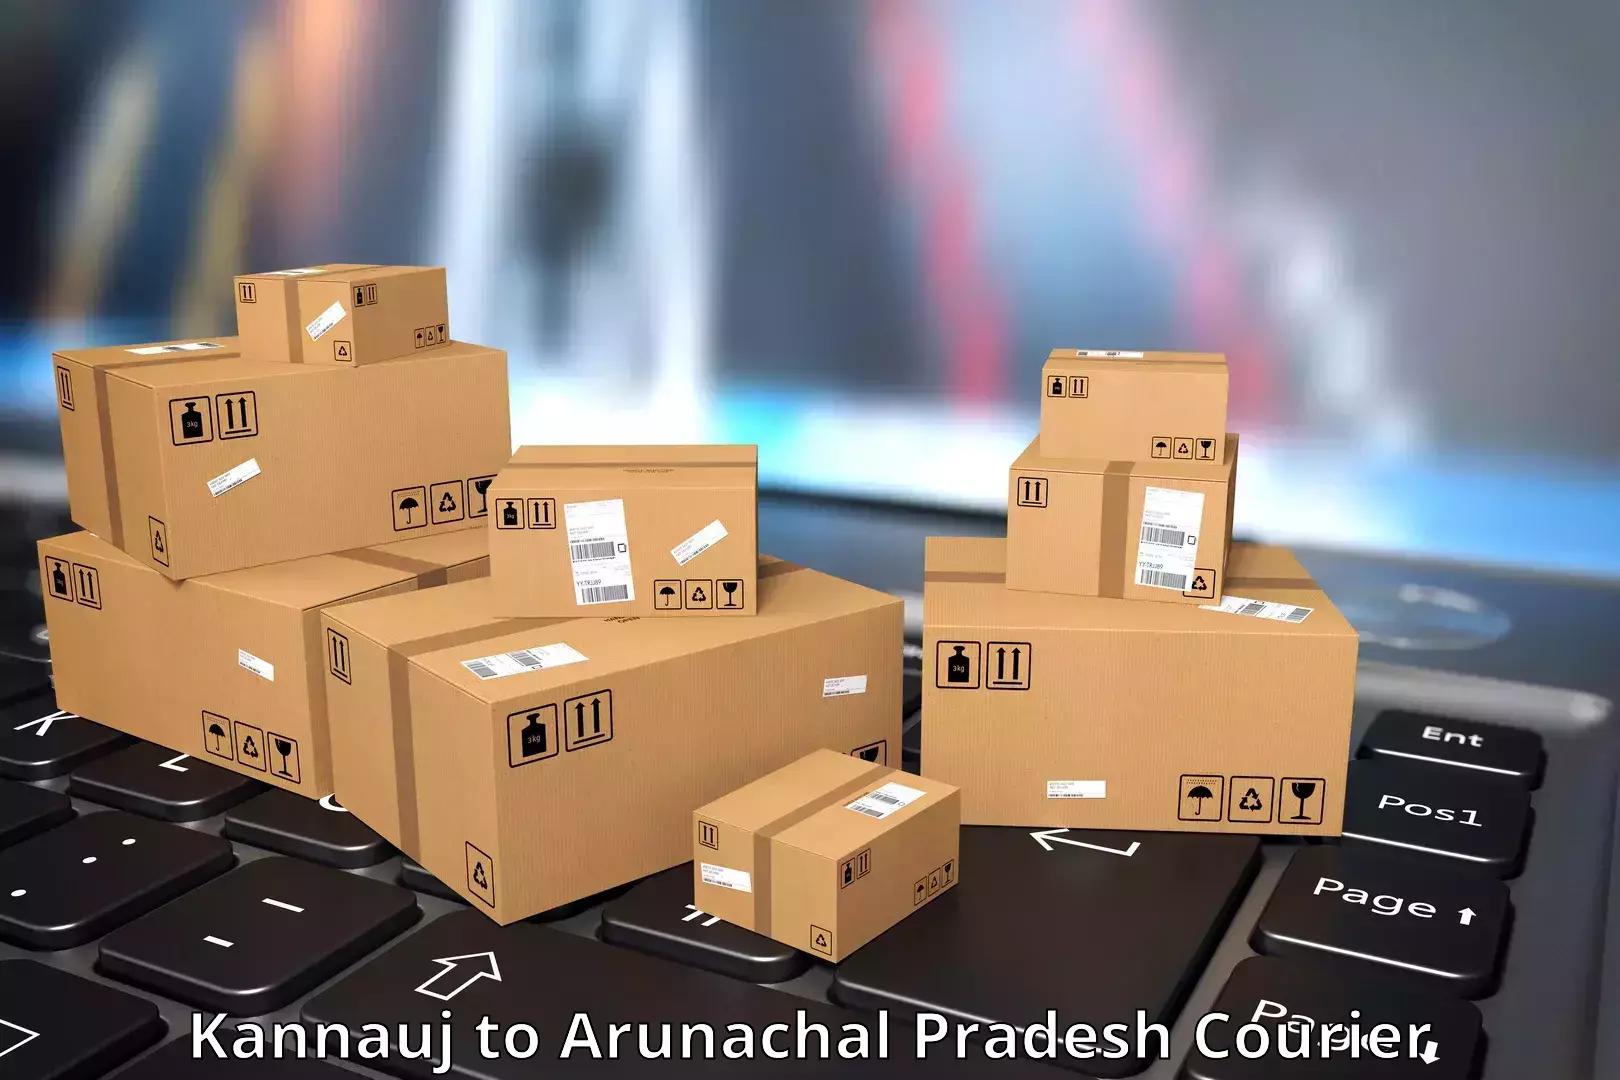 Urgent courier needs Kannauj to Lohit